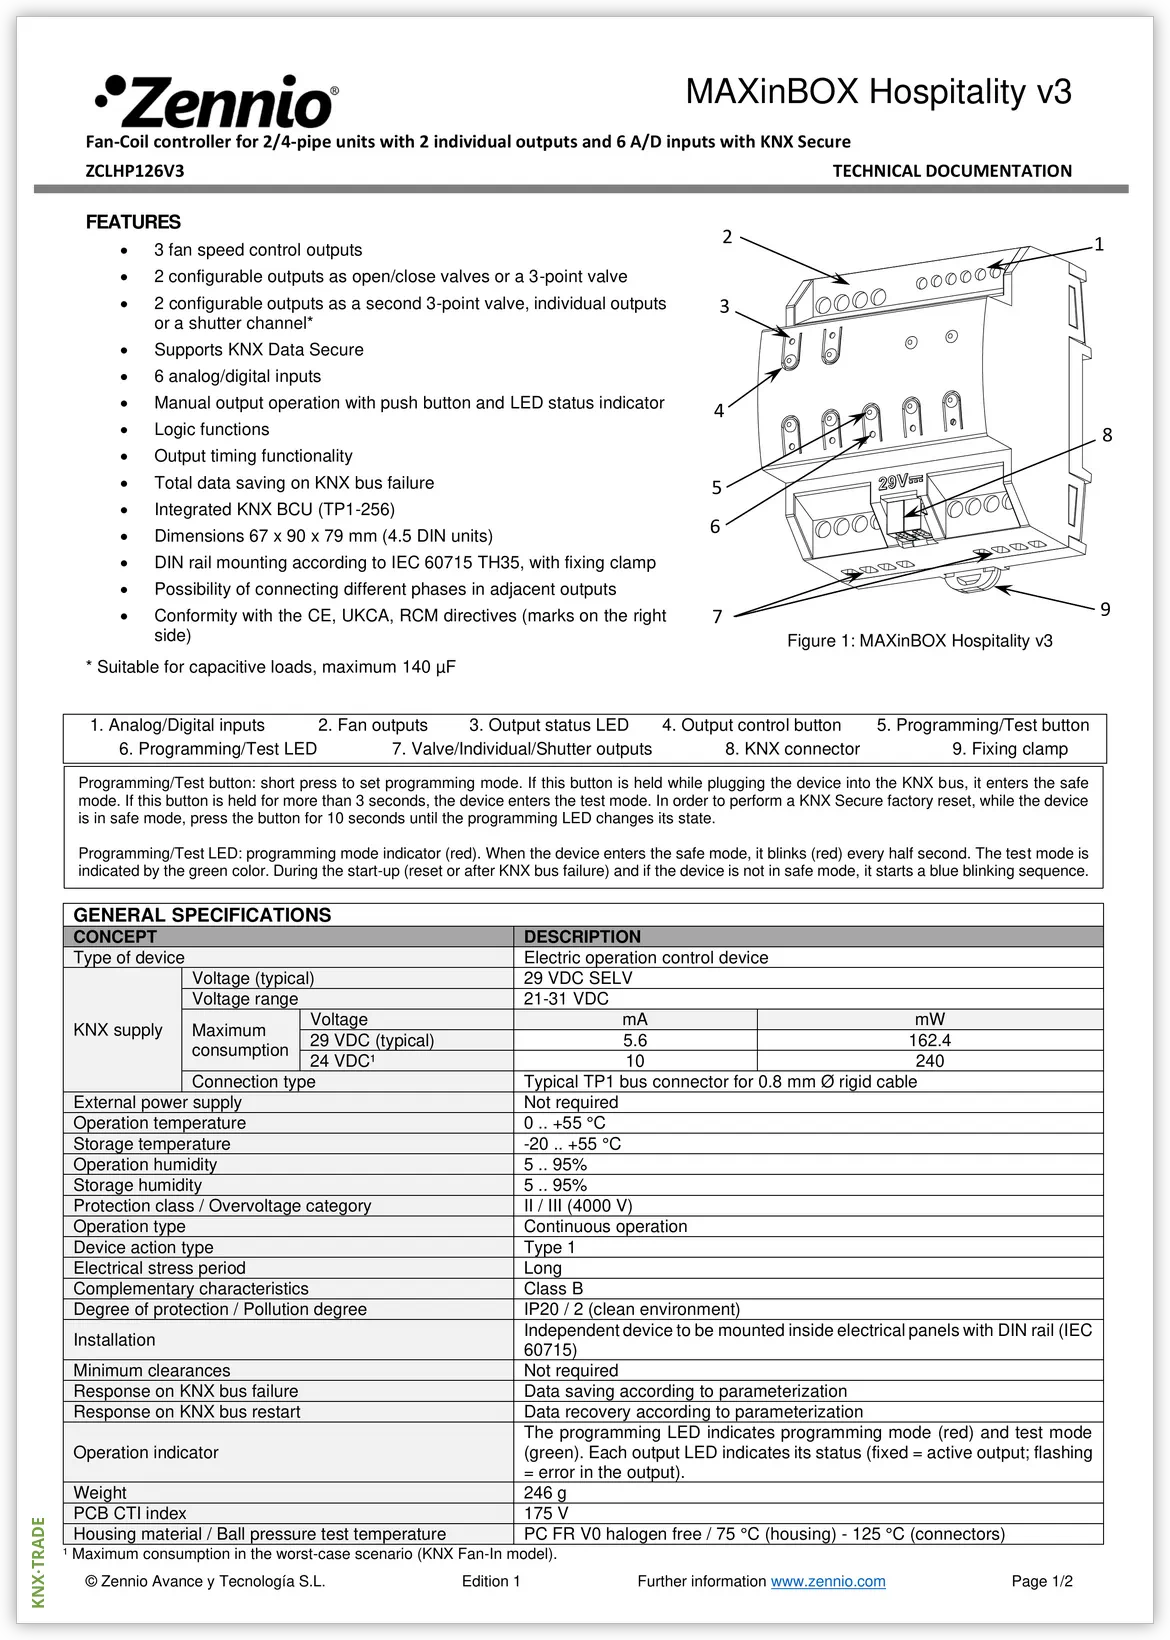 Datasheet (1) Zennio [ZCLHP126V3] MAXinBOX Hospitality v3 / Контроллер KNX для 2/4-х трубных фанкойлов